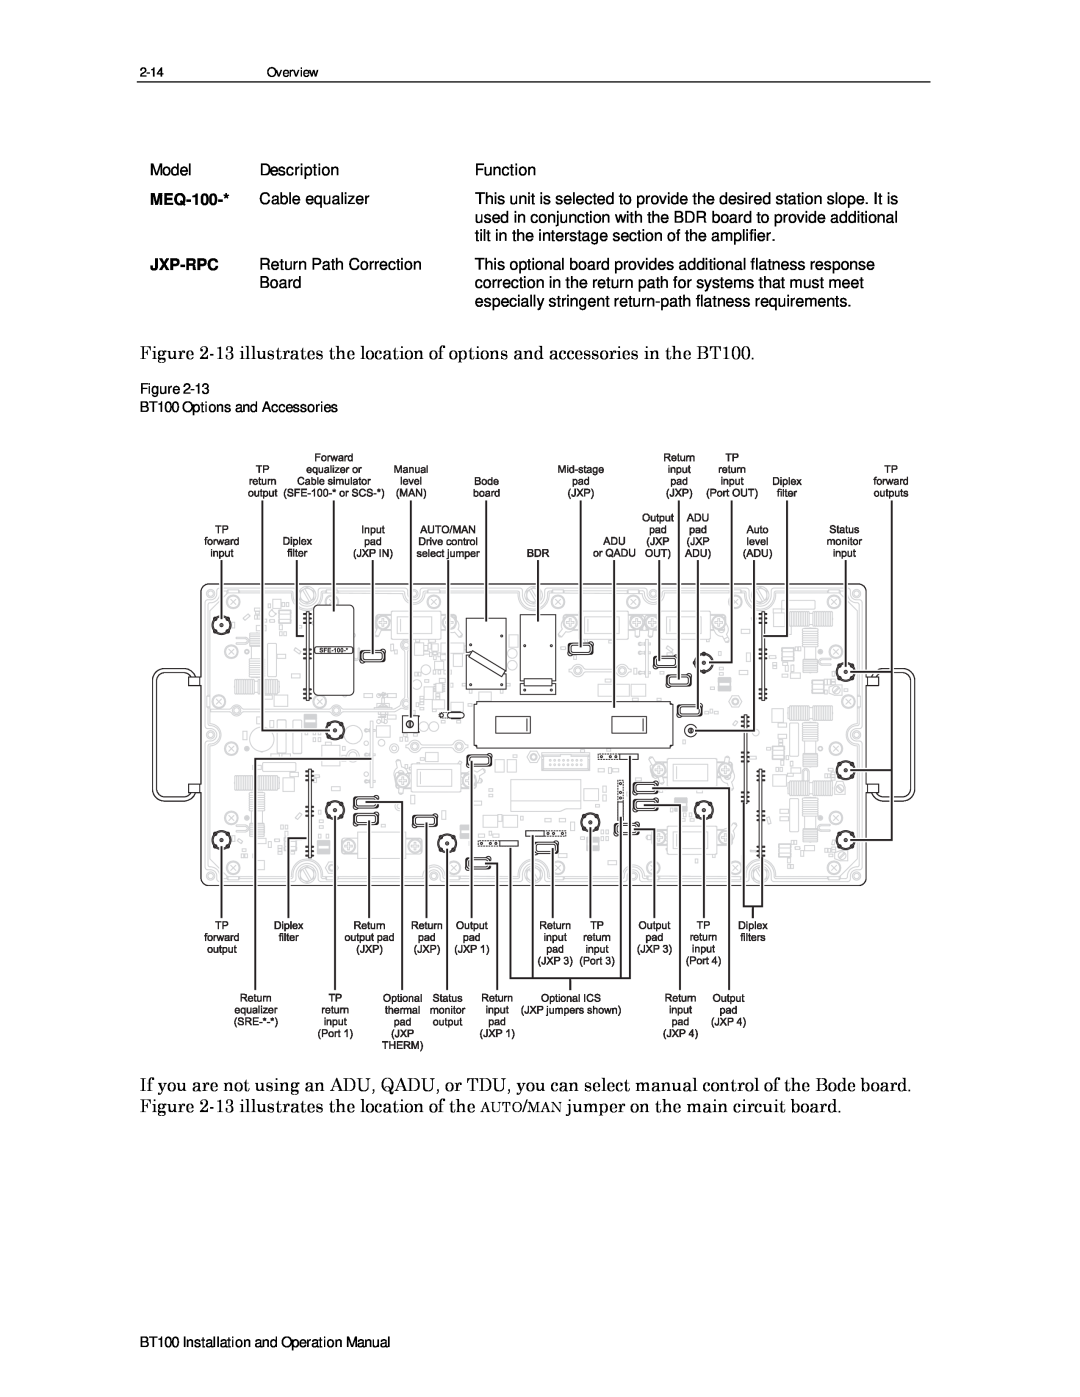 Motorola operation manual Model, Description, Function, MEQ-100, Jxp-Rpc, Figure BT100 Options and Accessories 